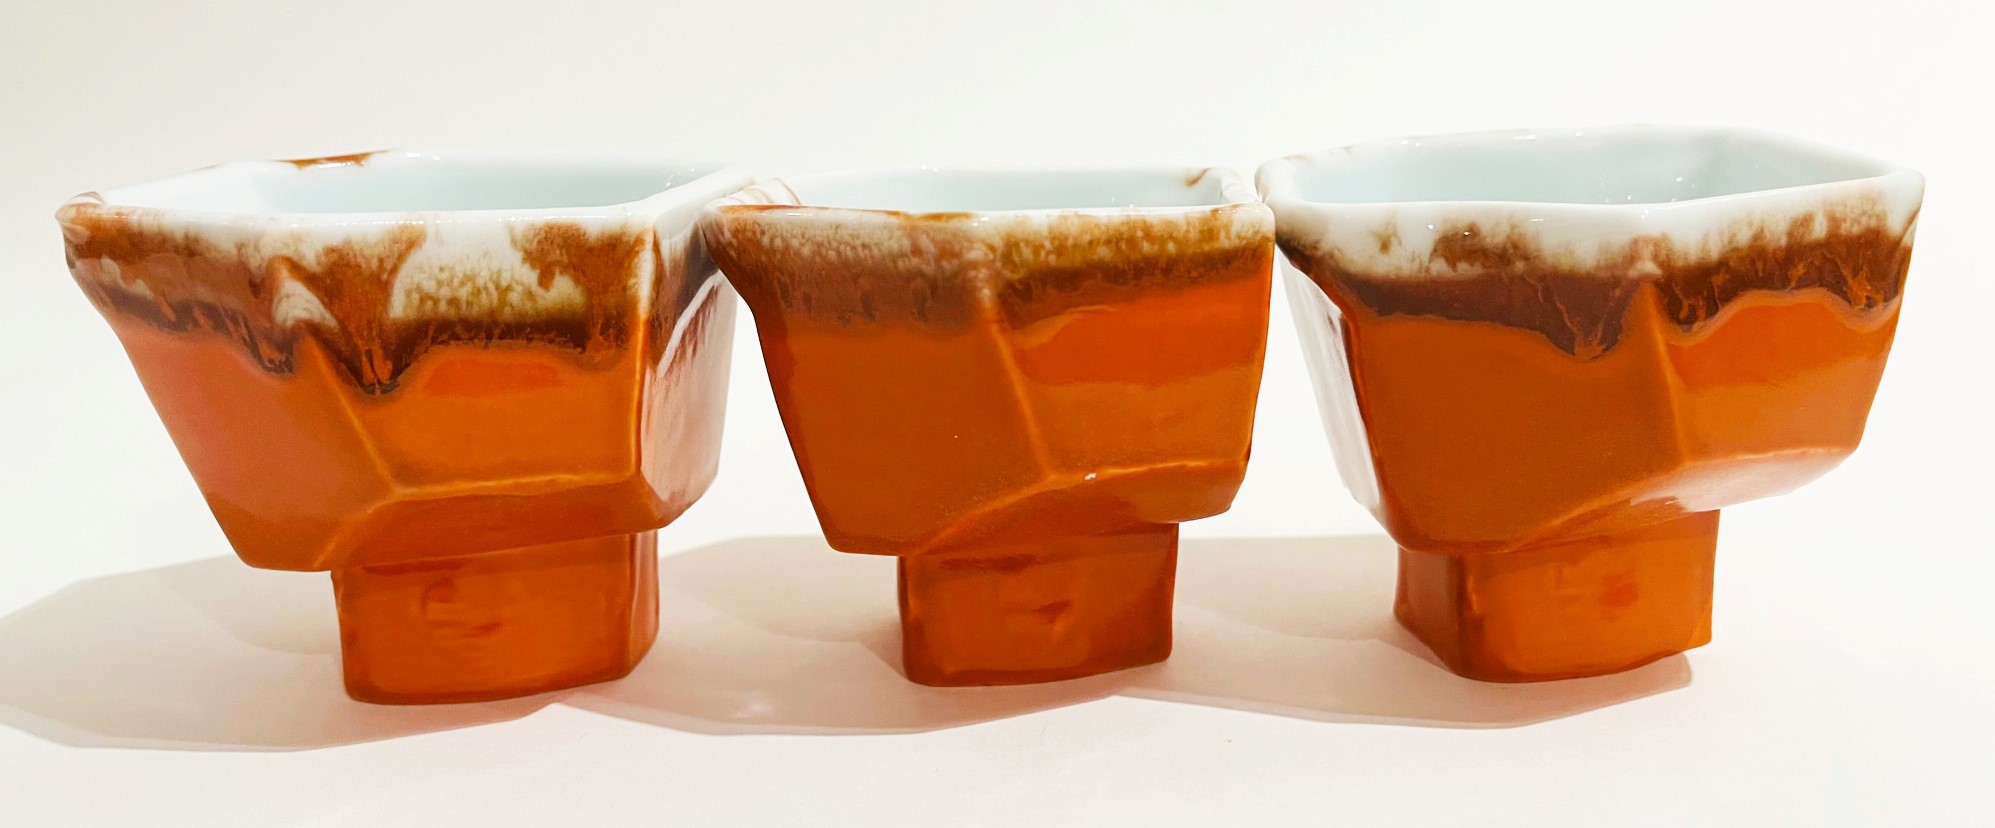 Photo of sake cups